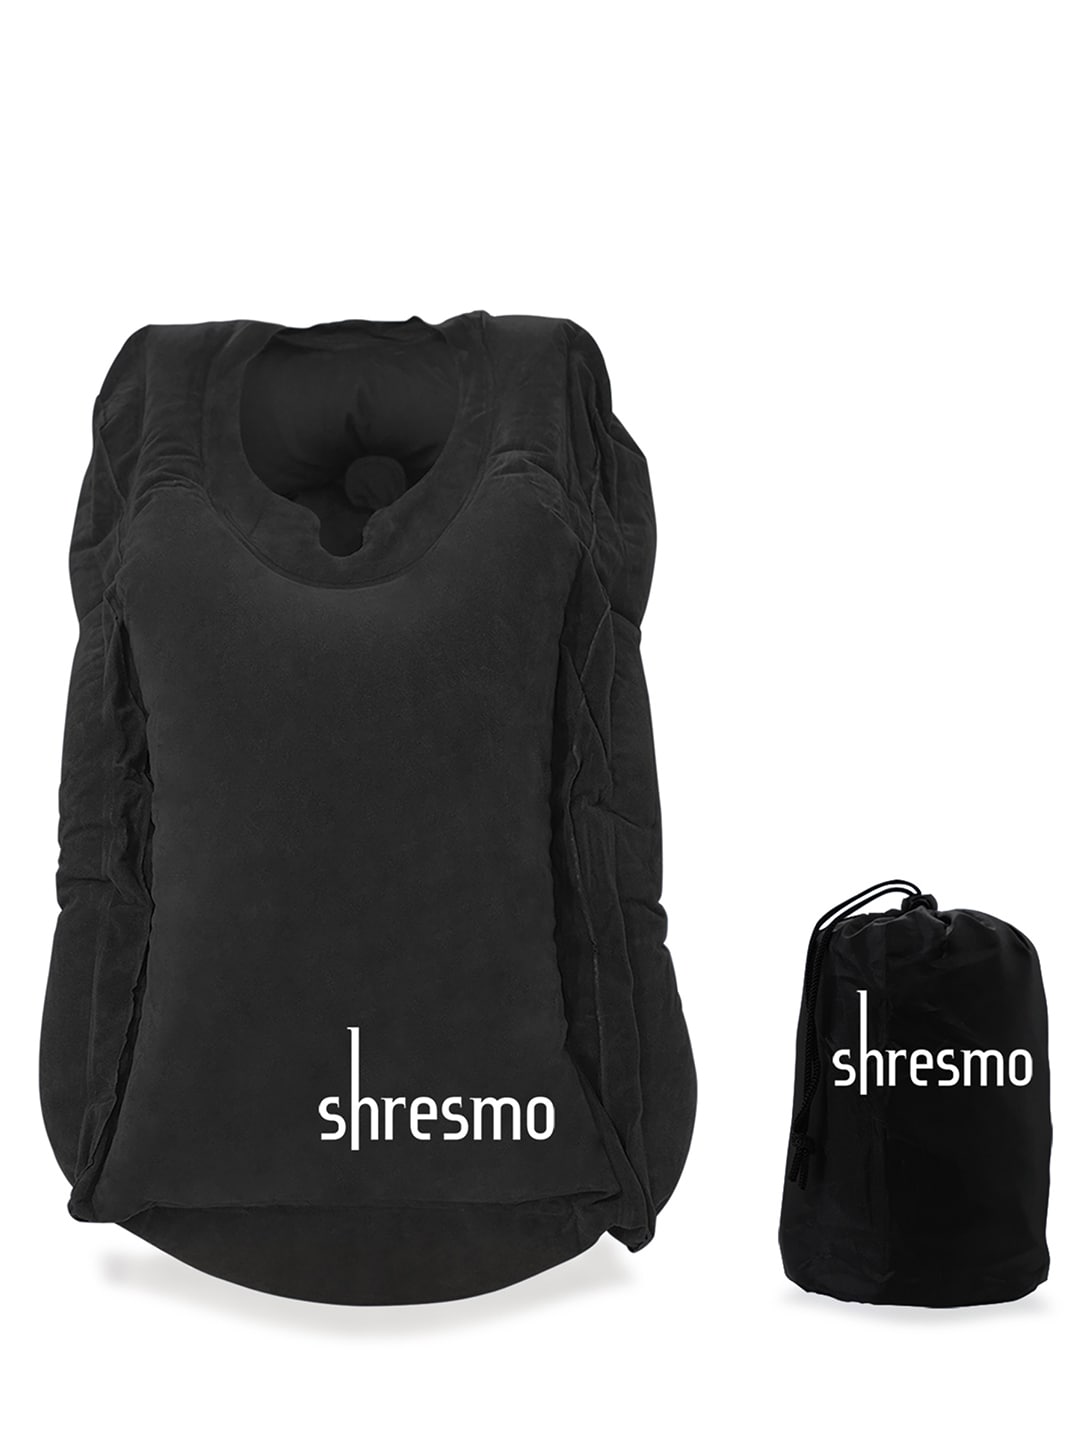 Shresmo Unisex Black Travel Neck Pillow Price in India